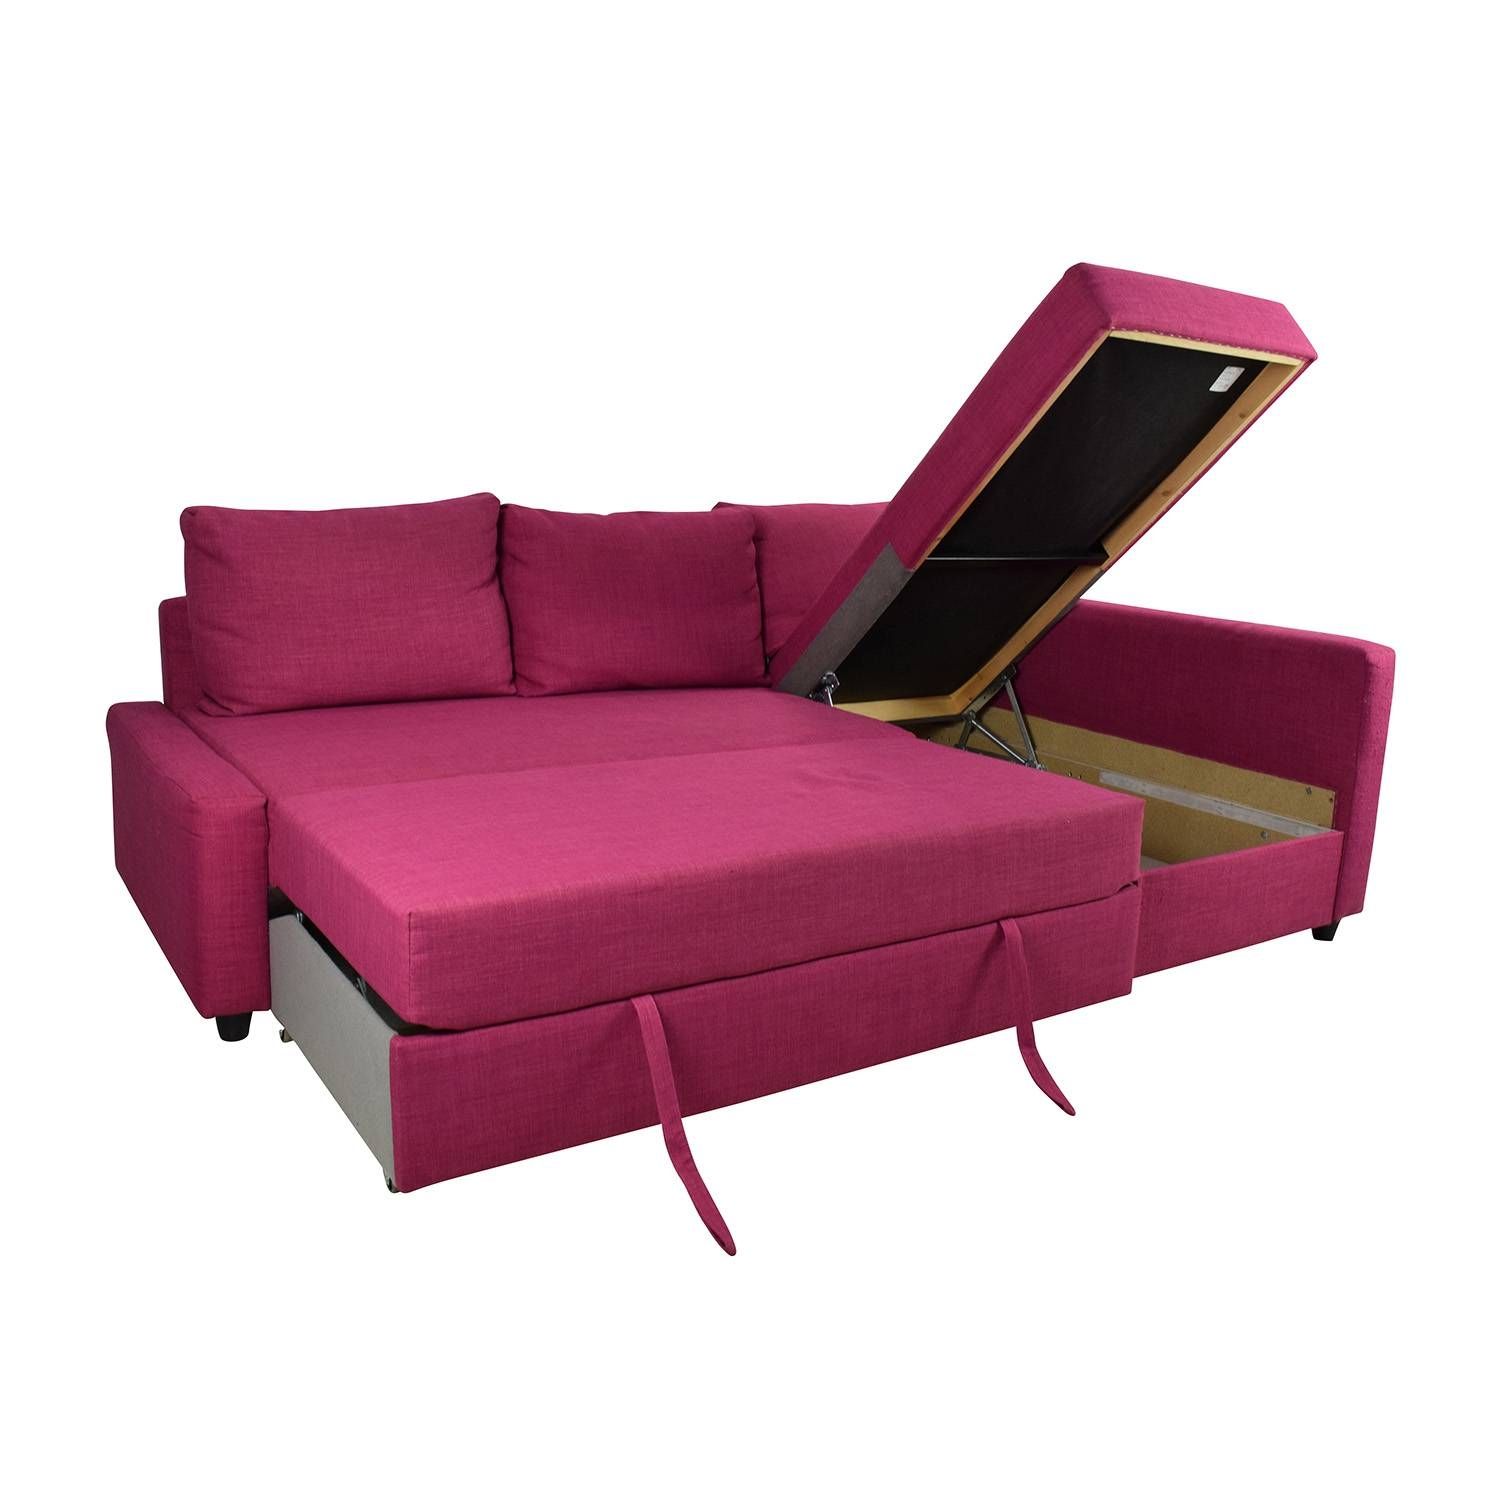 66% Off – Ikea Ikea Friheten Pink Sleeper Sofa / Sofas With Ikea Sleeper Sofa Sectional (View 20 of 25)